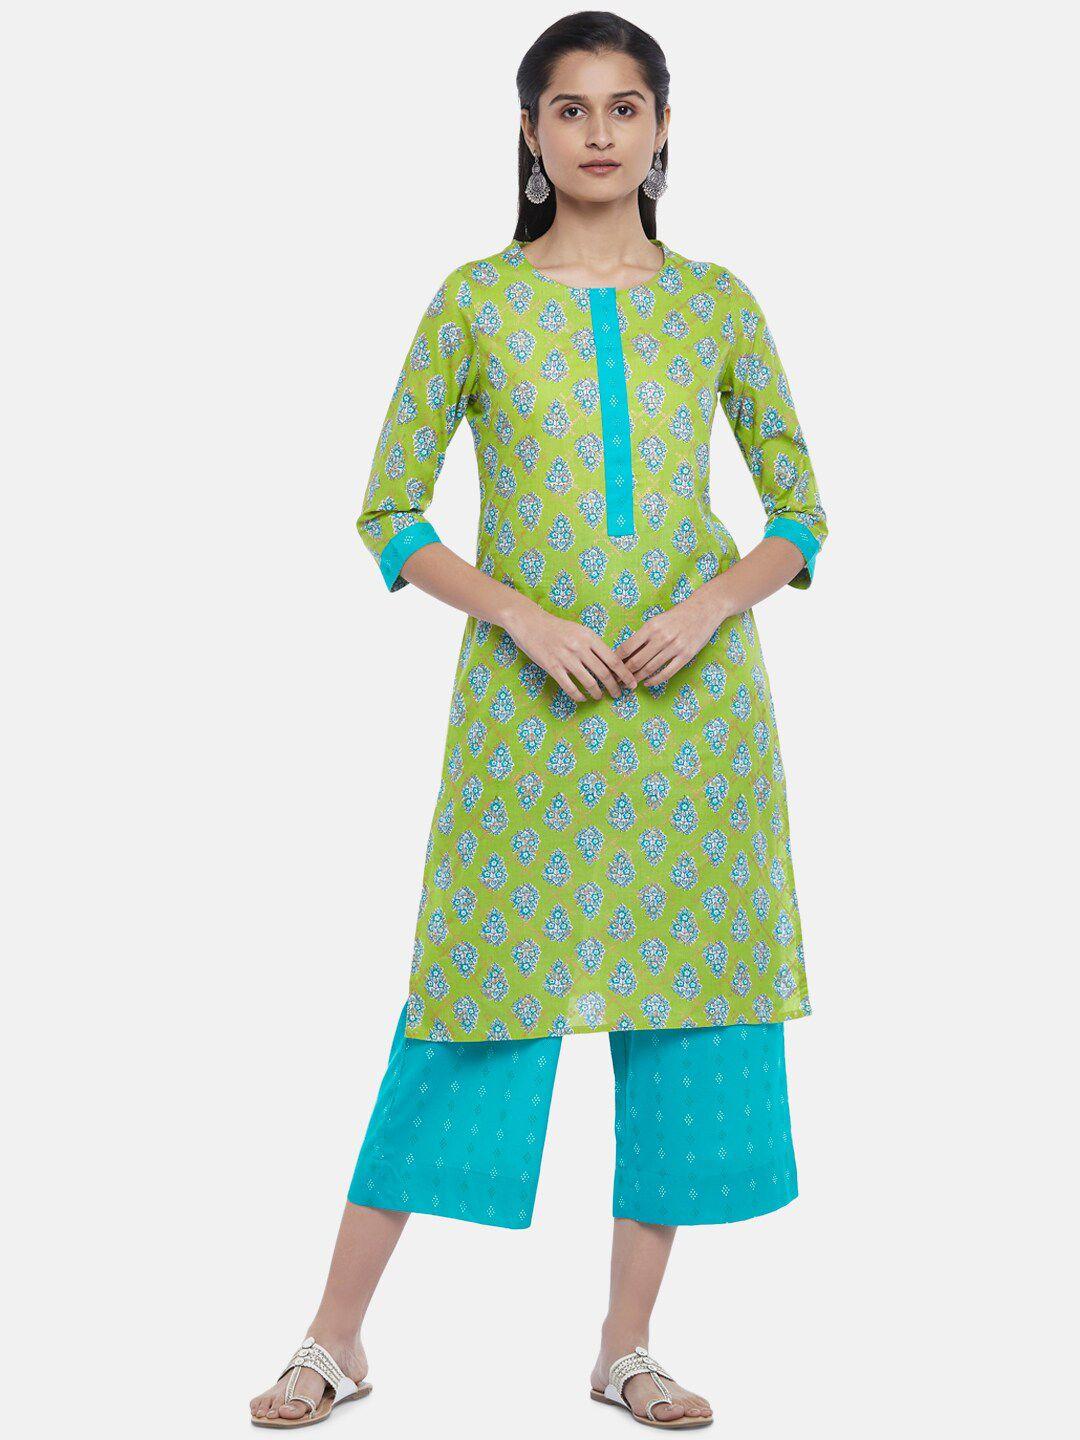 rangmanch by pantaloons lime green ethnic motifs printed pure cotton kurta set